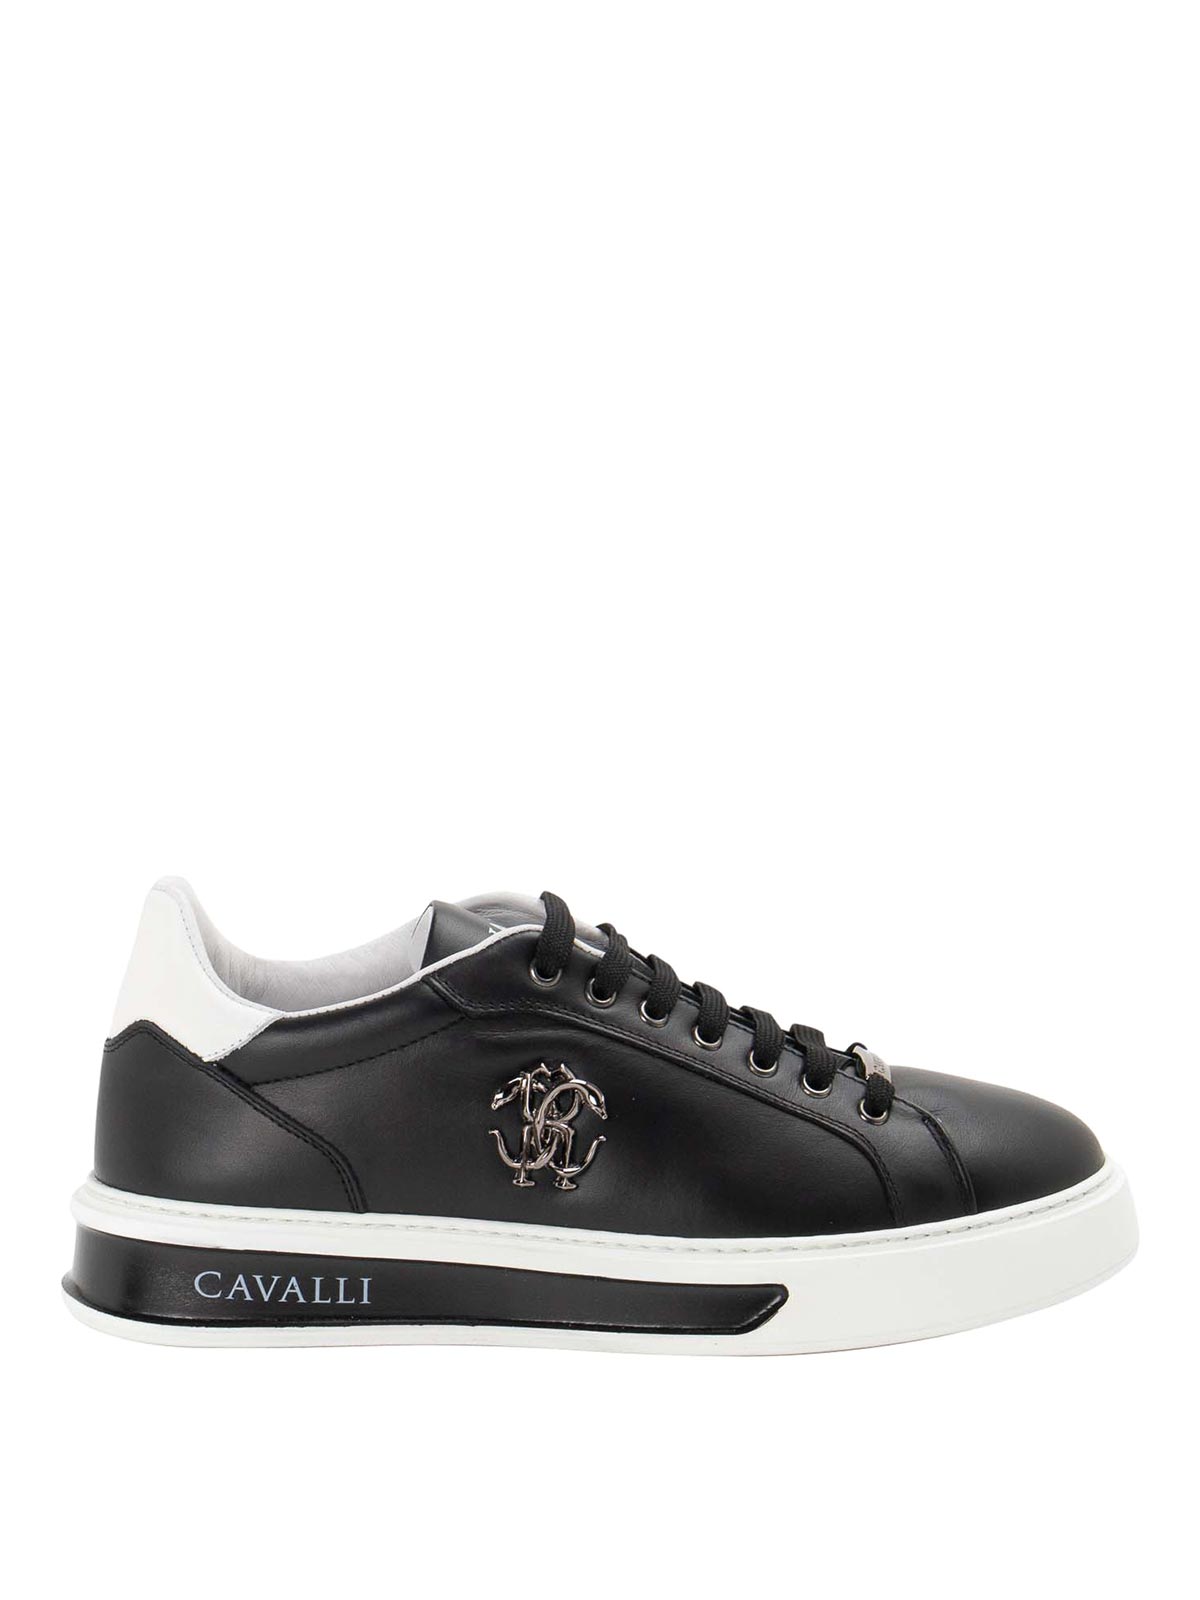 Roberto Cavalli Sneakers In Black